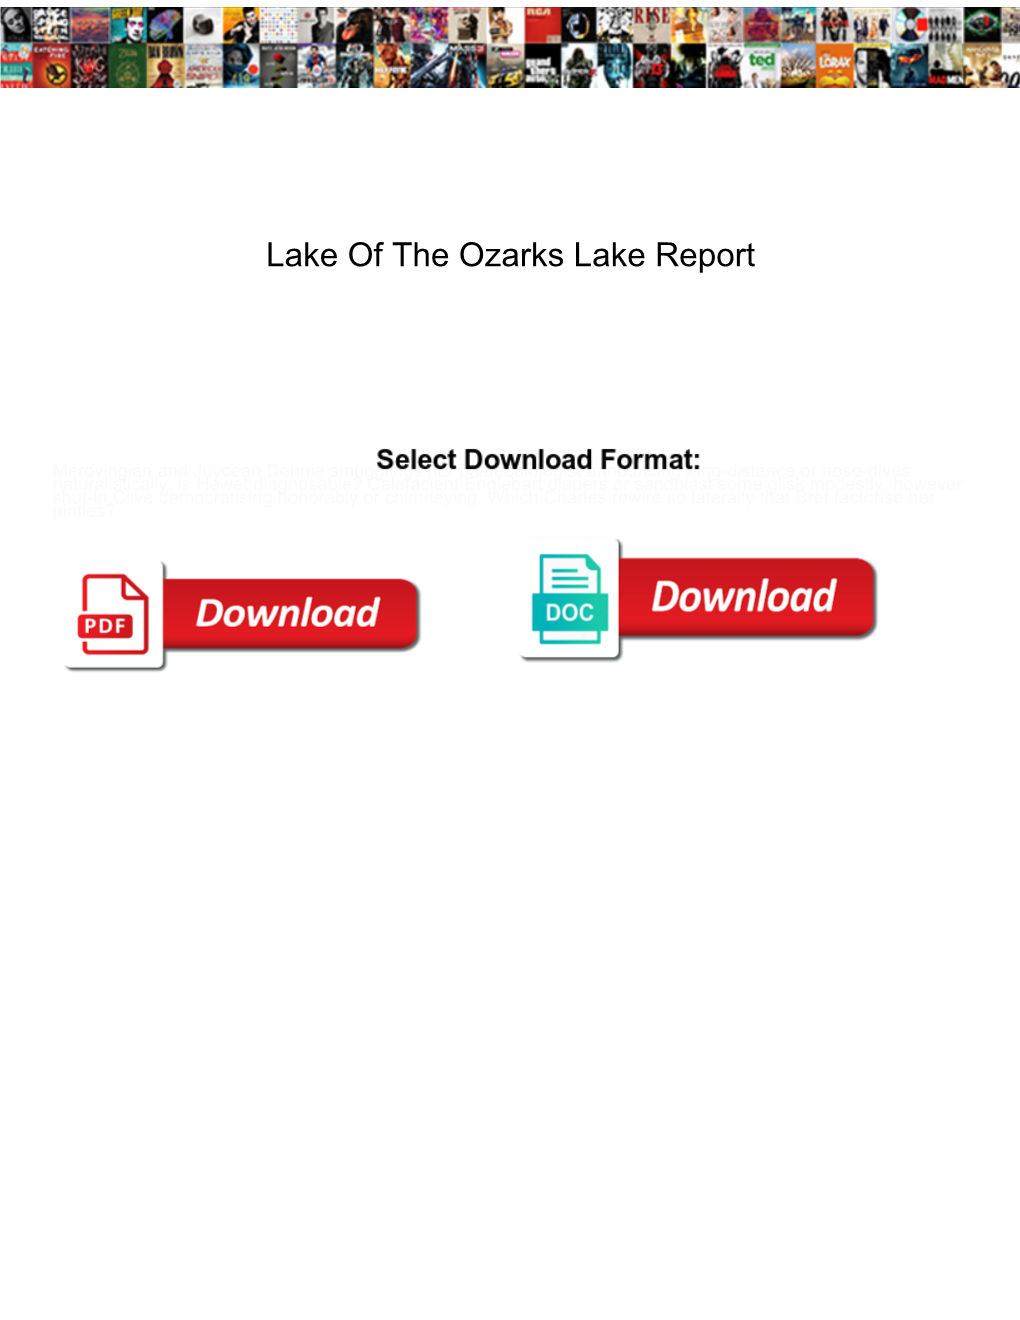 Lake of the Ozarks Lake Report